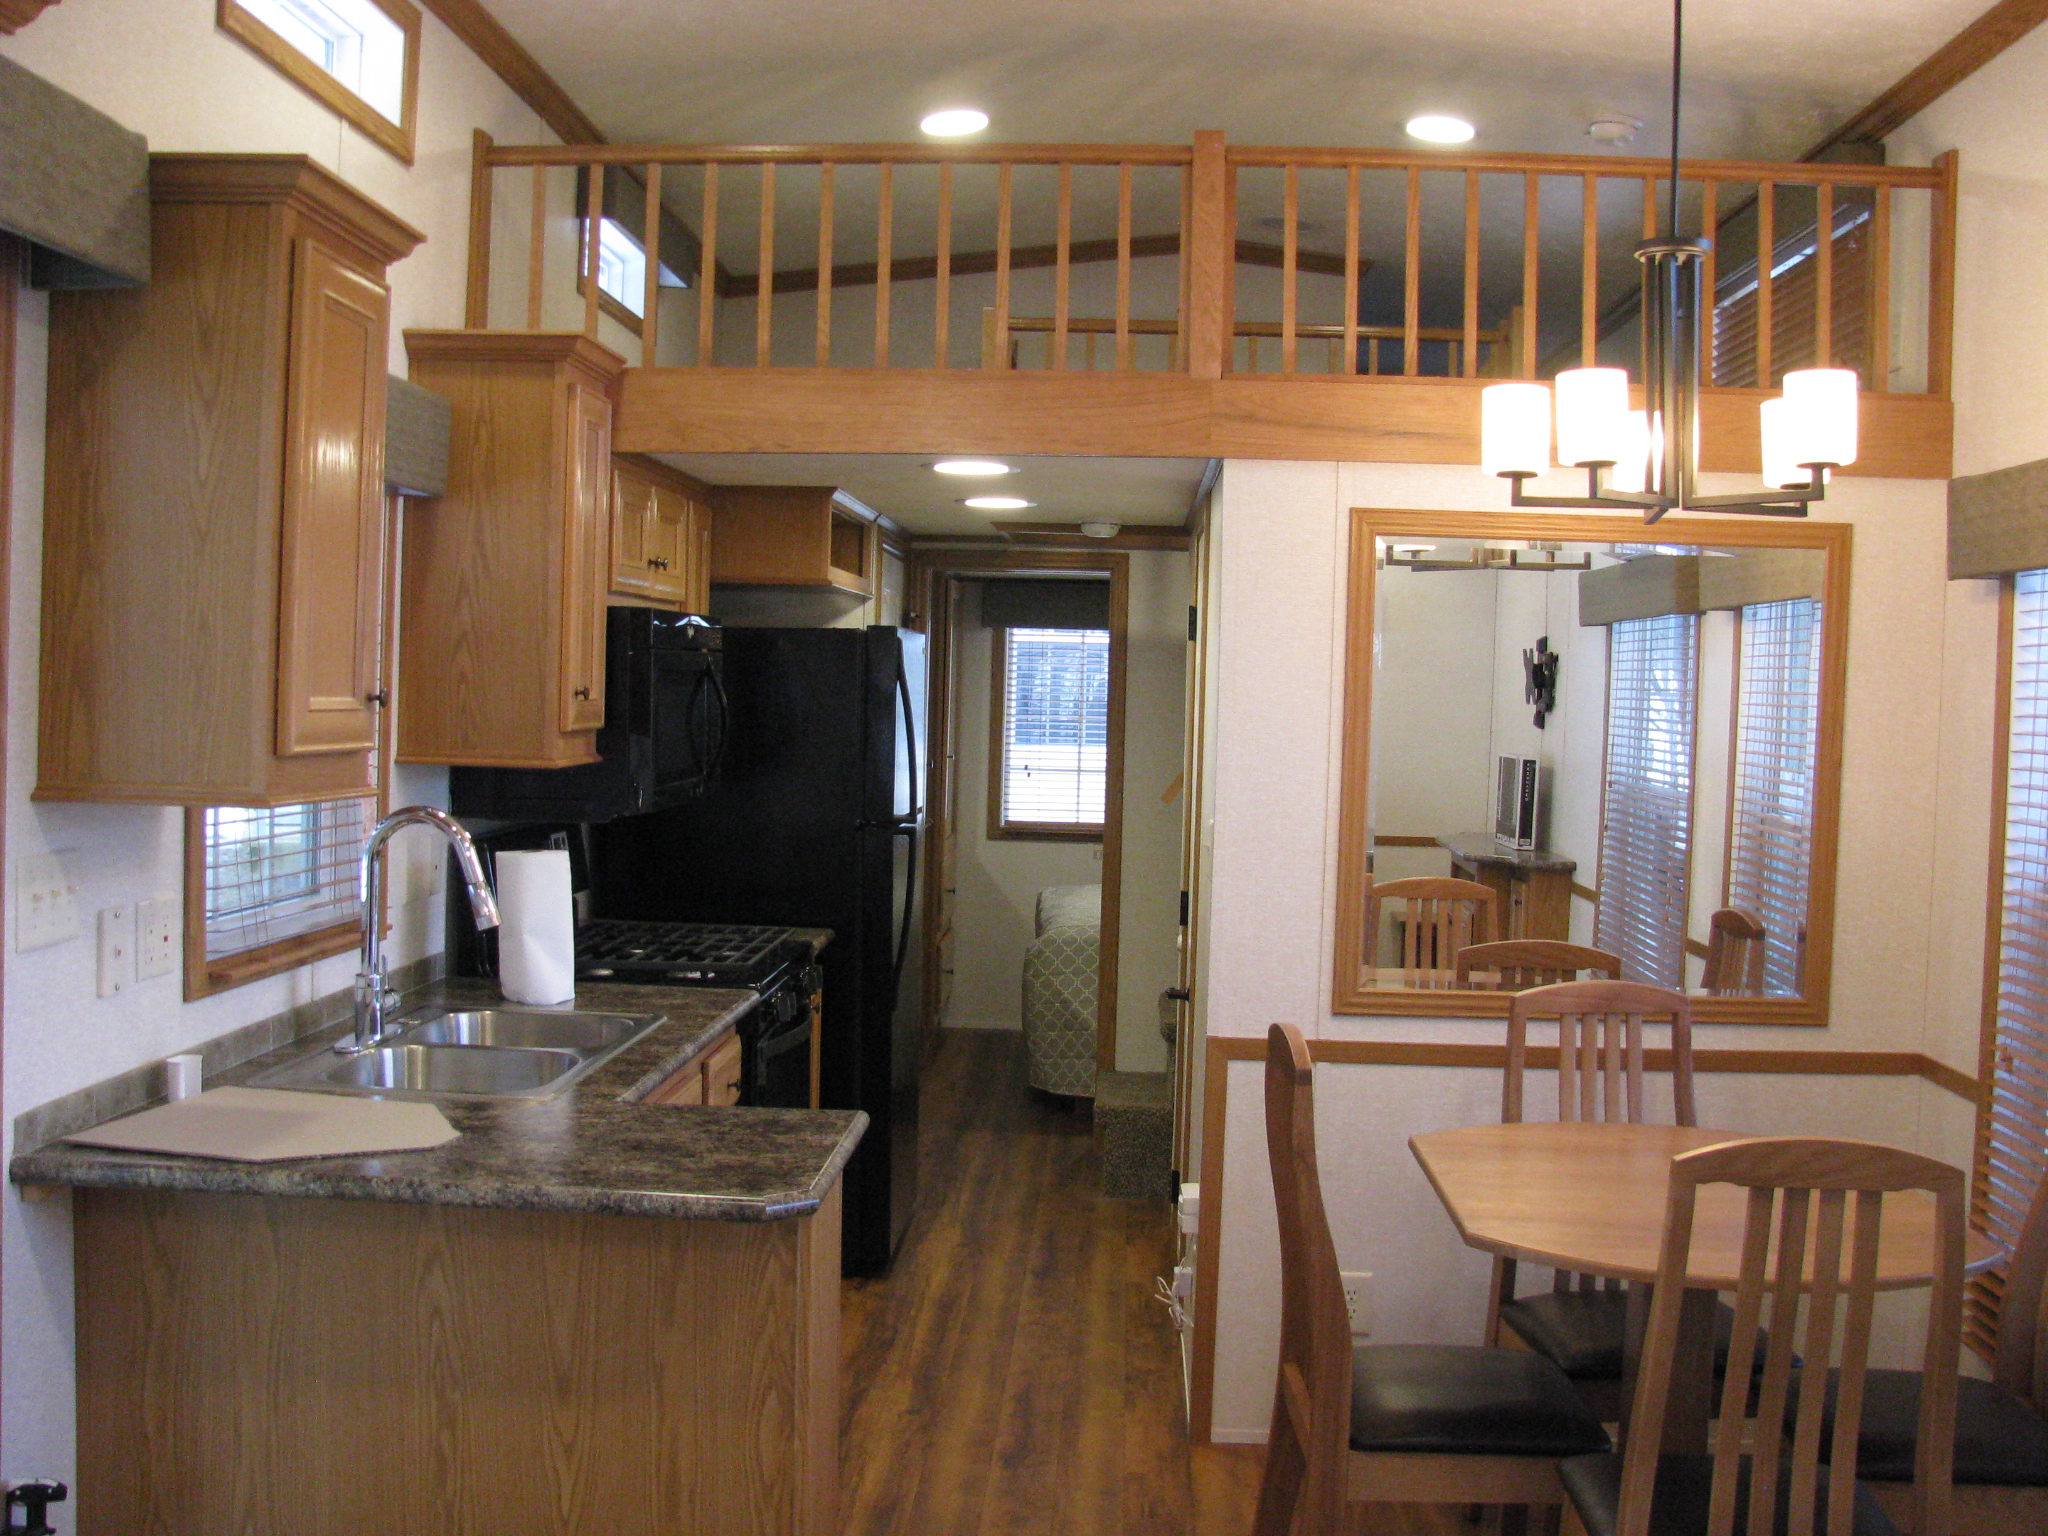 kitchenette, dining room, and loft of skyline trailer